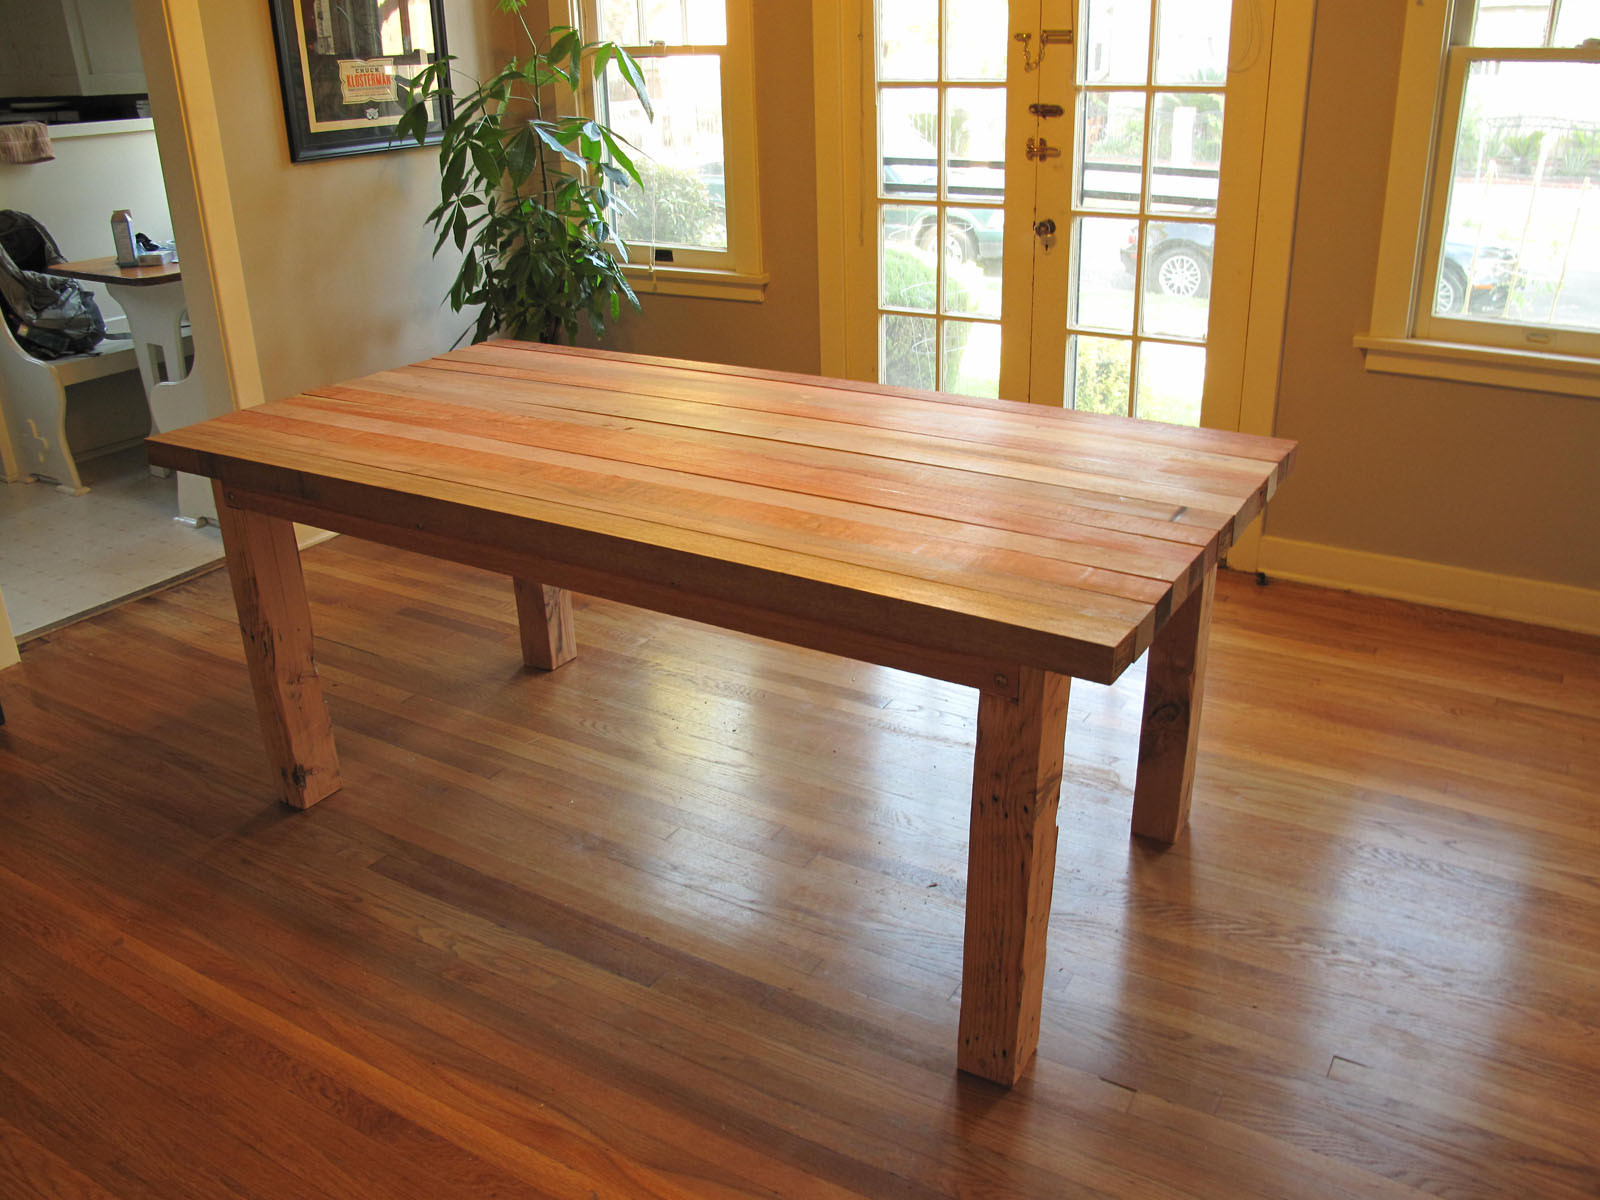 DIY Reclaimed Wood Dining Table
 DIY Reclaimed Wood Dining Table